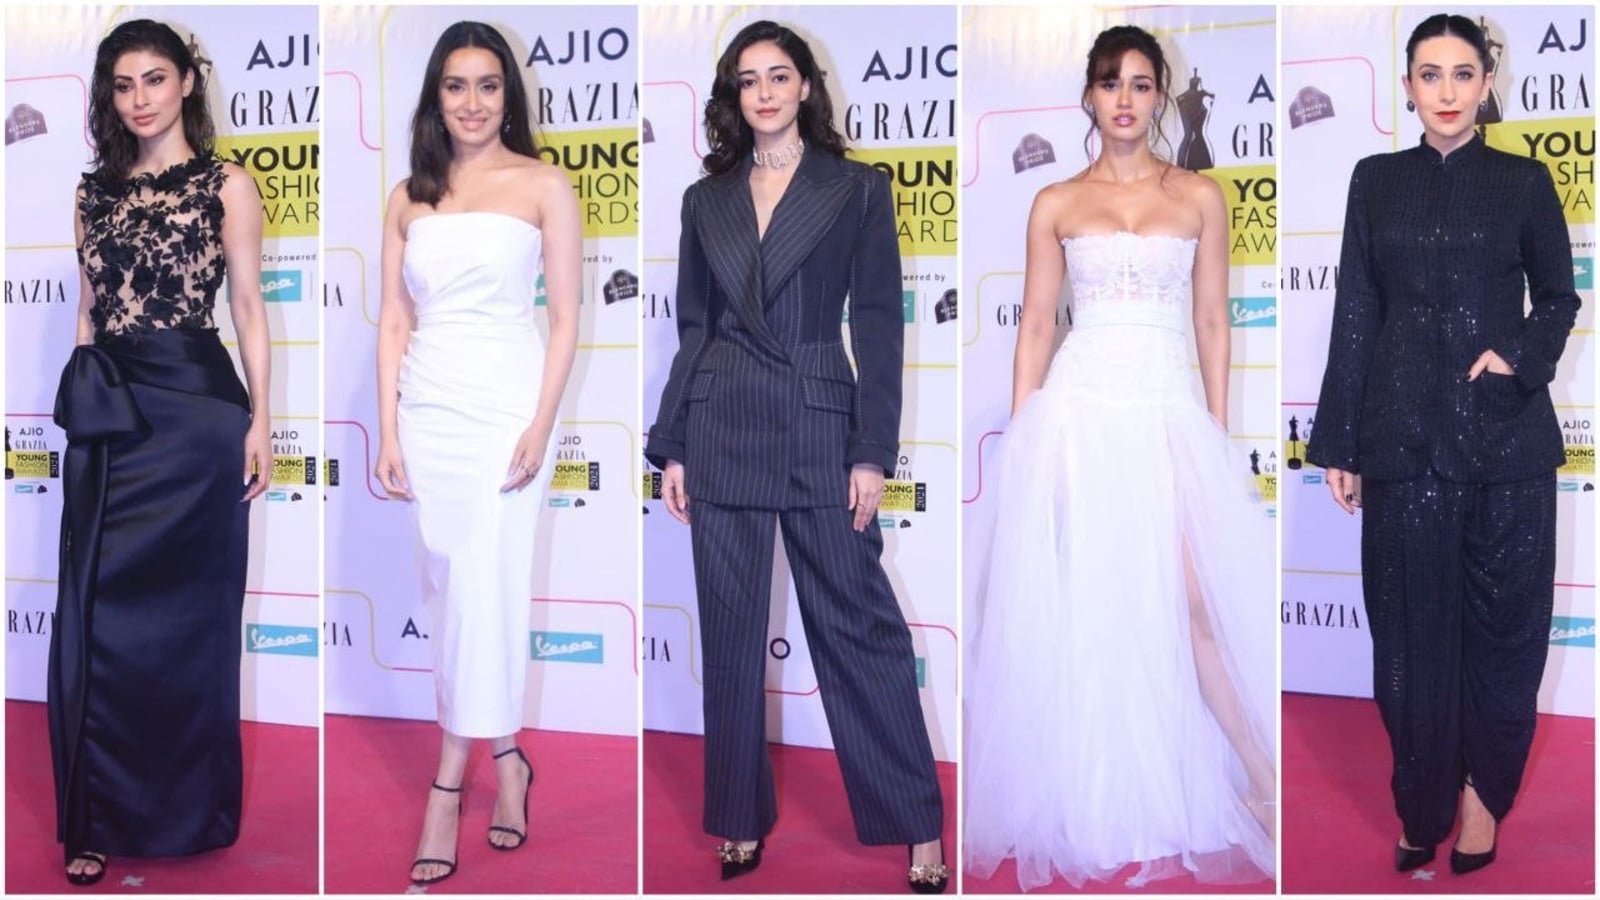 Ananya Pandey, Shraddha Kapoor, Disha Patani, Mouni Roy, Mrunal Thakur and others attend fashion awards: Who wore what